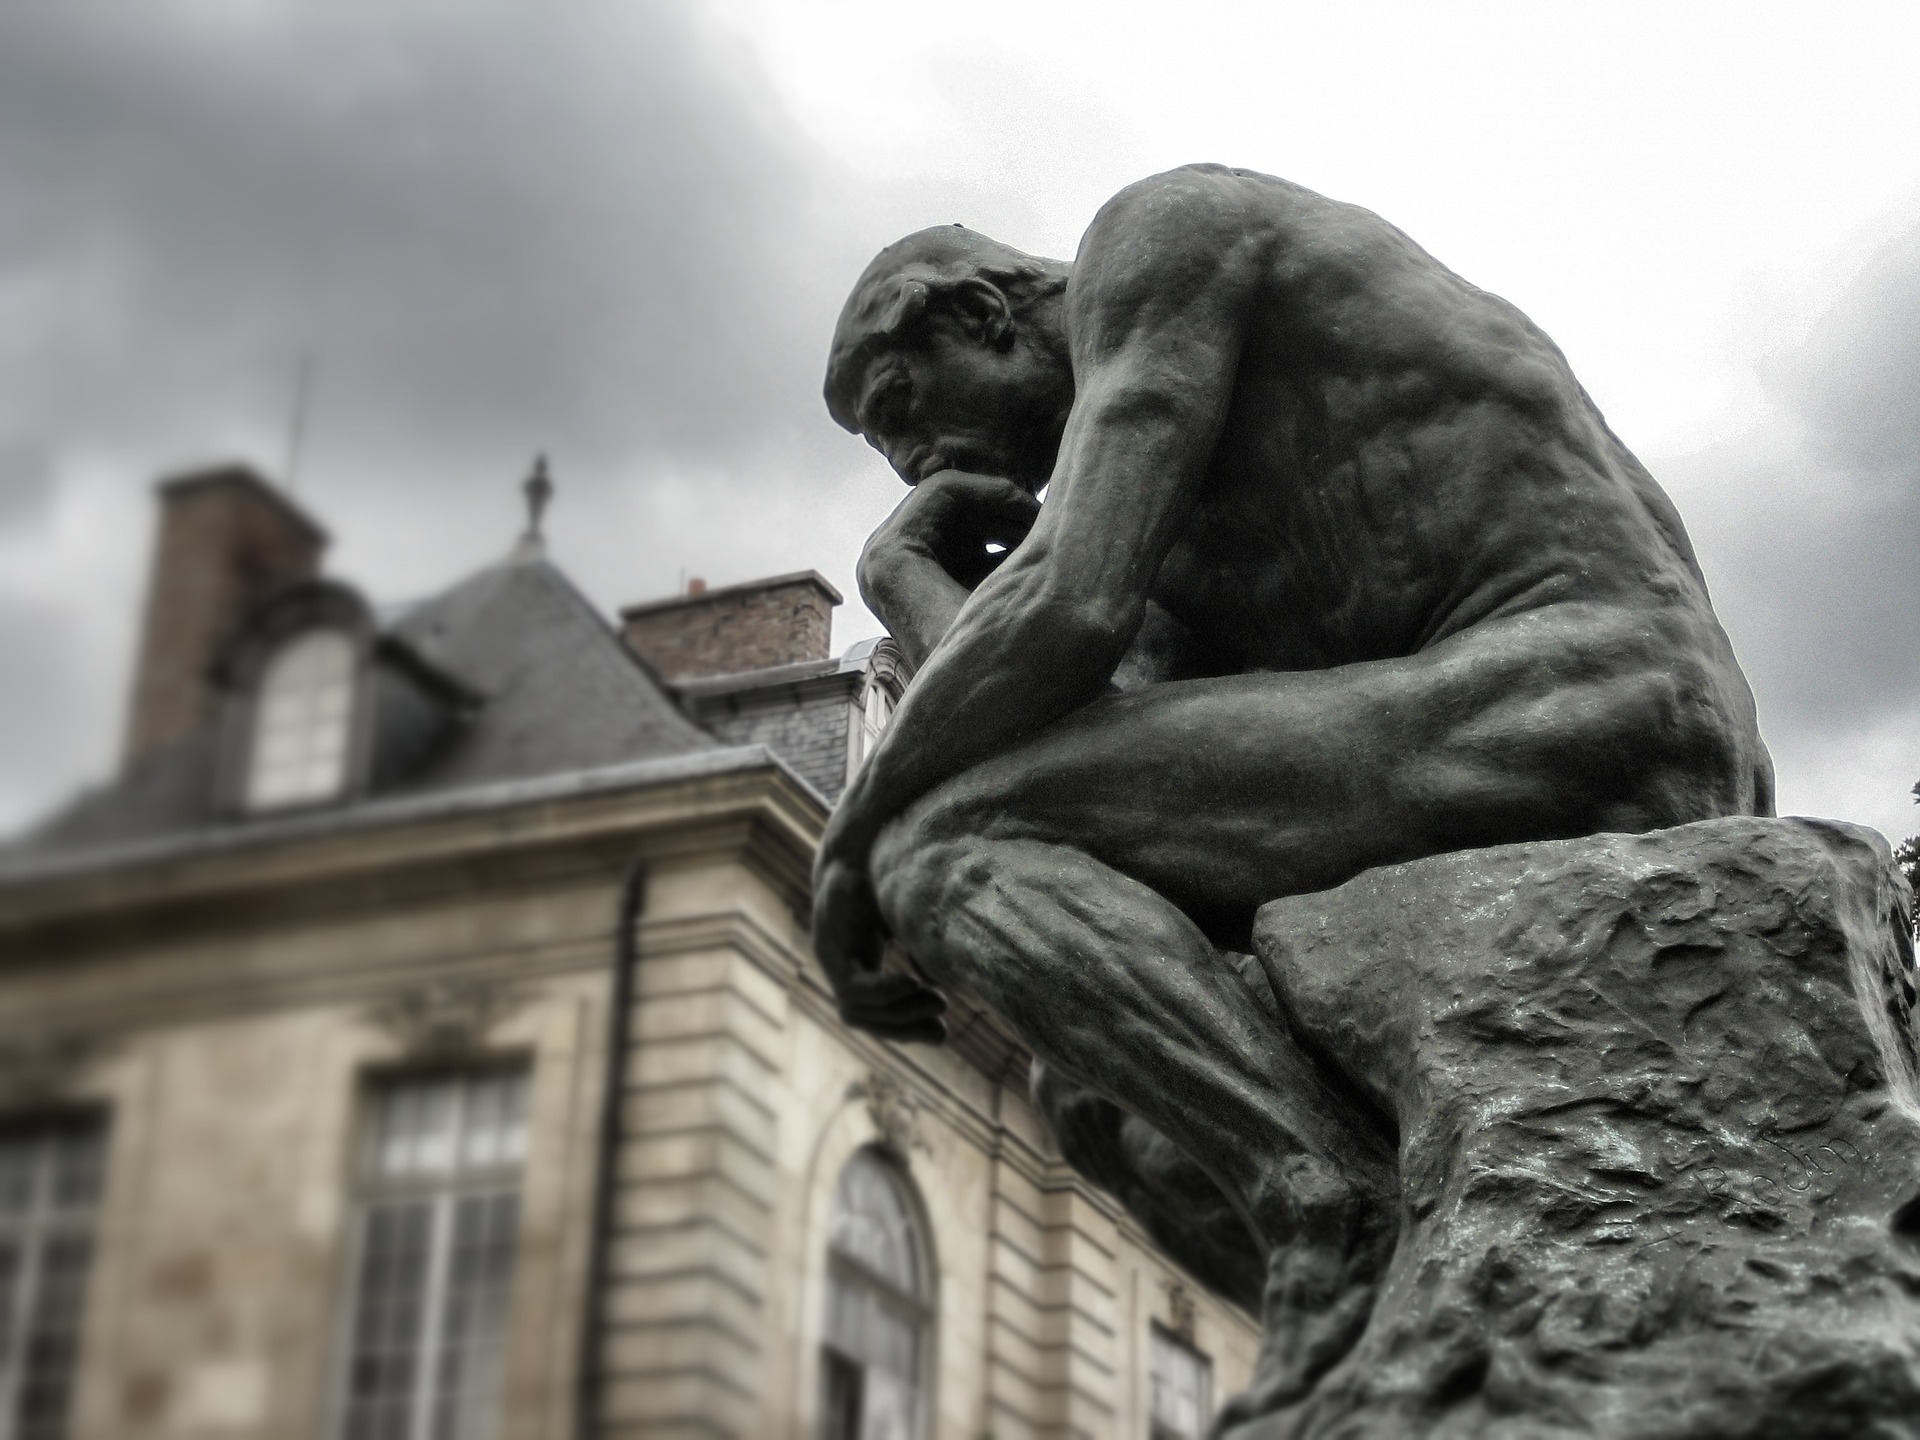 Rodin's The Thinker statue